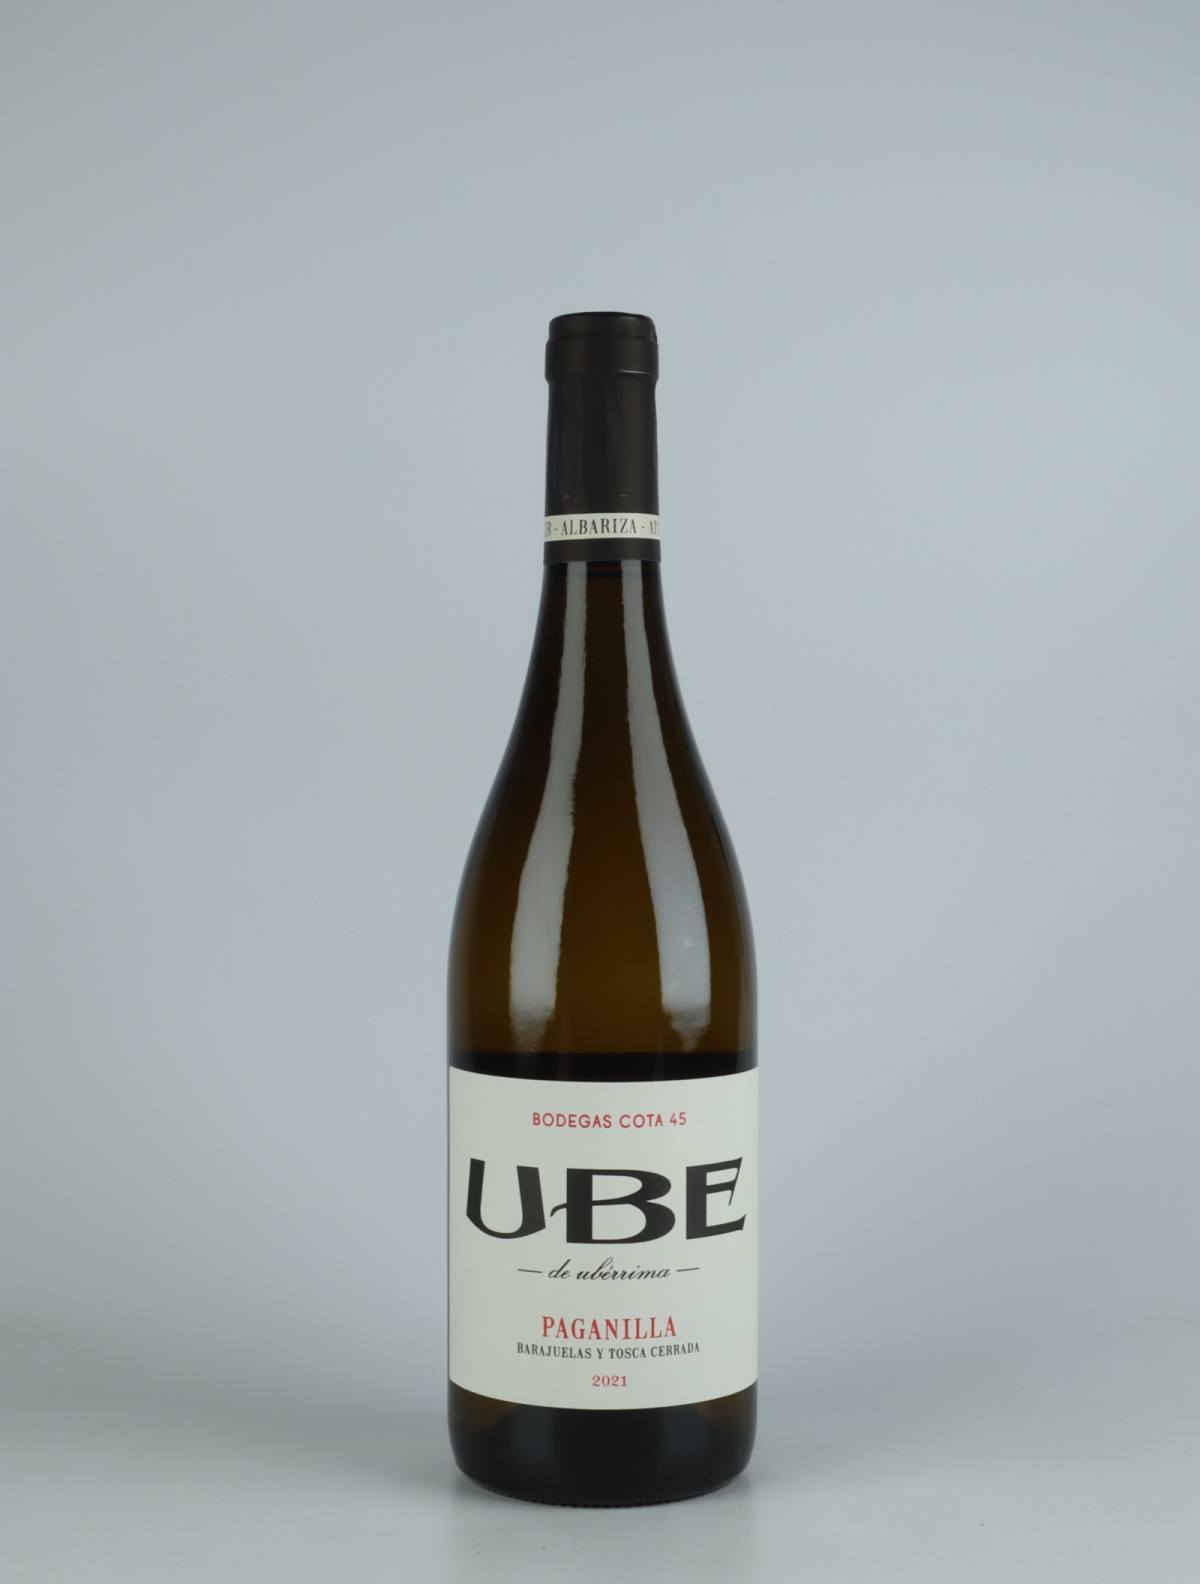 En flaske 2021 UBE Paganilla Hvidvin fra Bodegas Cota 45, Andalusien i Spanien